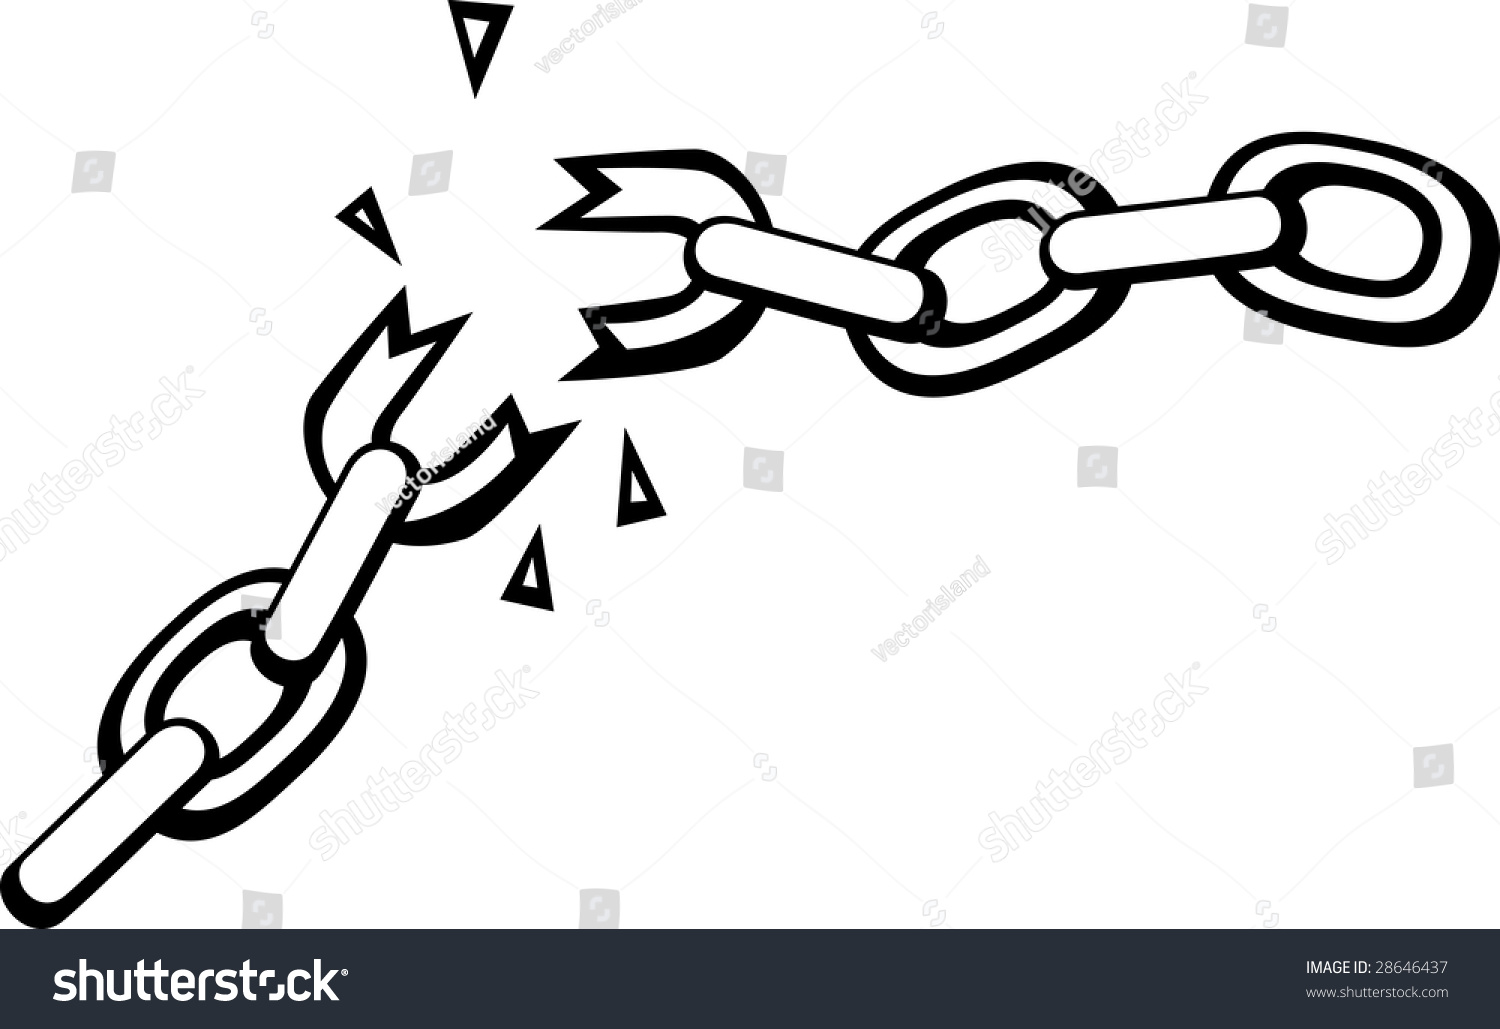 slavery clipart broken chain